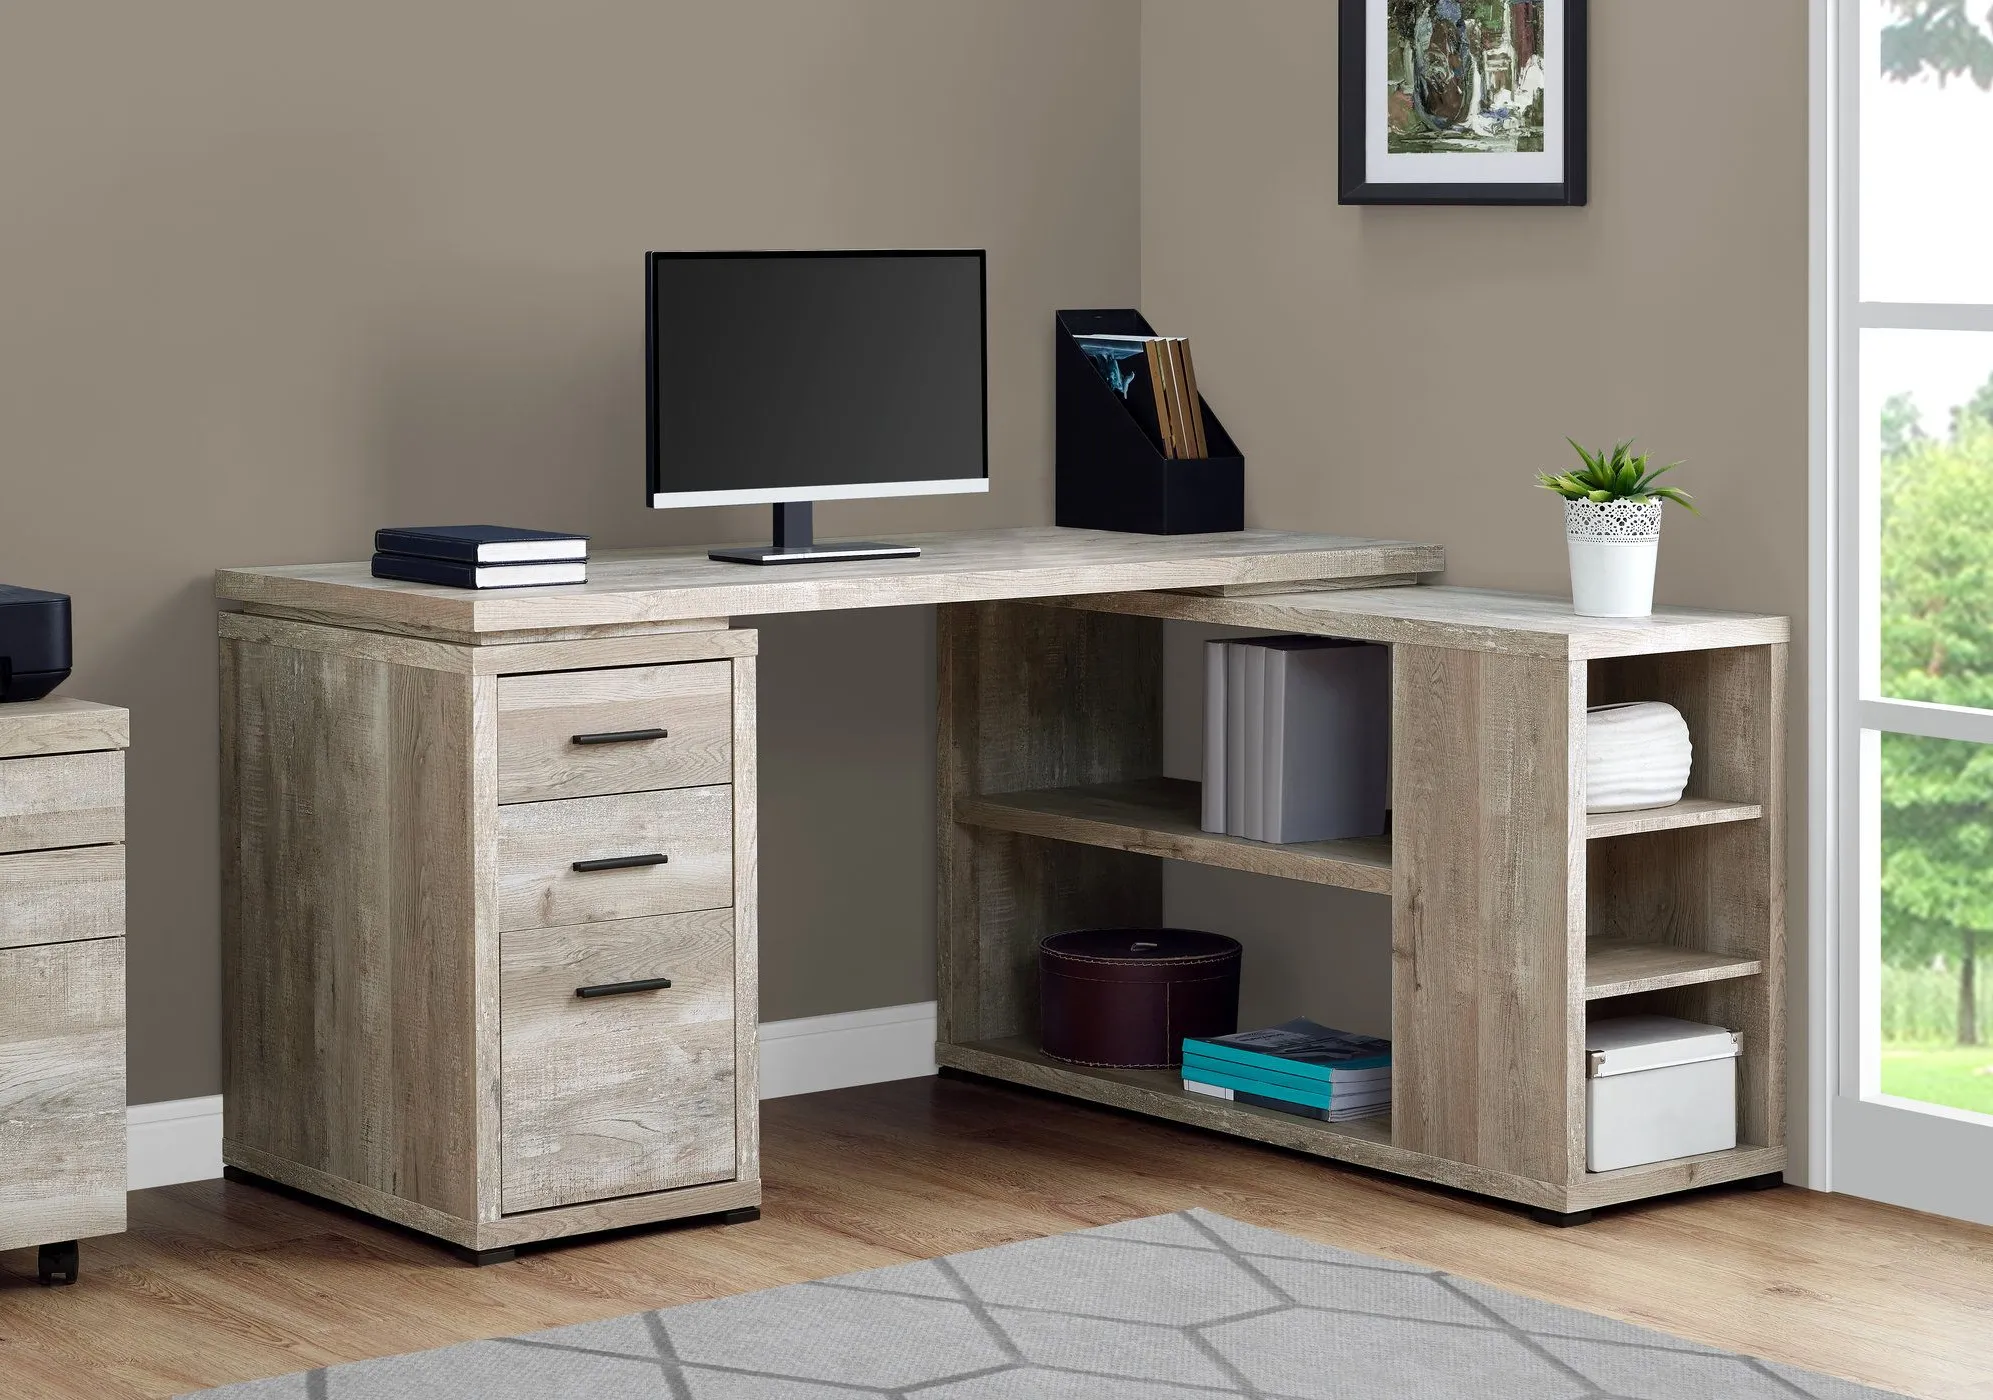 Computer Desk, Home Office, Corner, Left, Right Set-Up, Storage Drawers, L Shape, Work, Laptop, Laminate, Beige, Contemporary, Modern